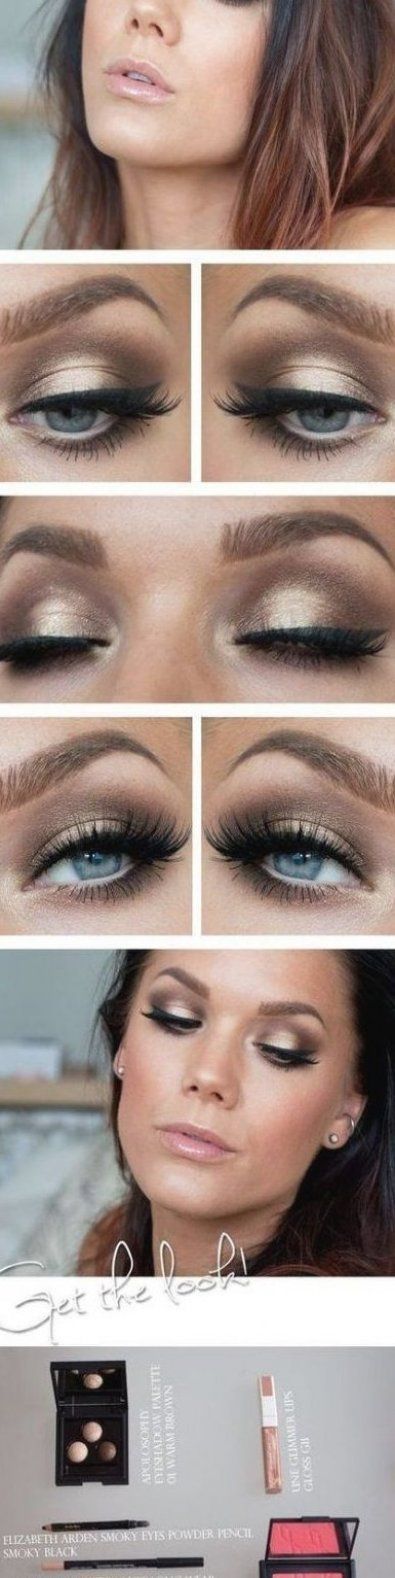 linda-hallberg-makeup-tutorial-00_4 Linda hallberg make-up tutorial